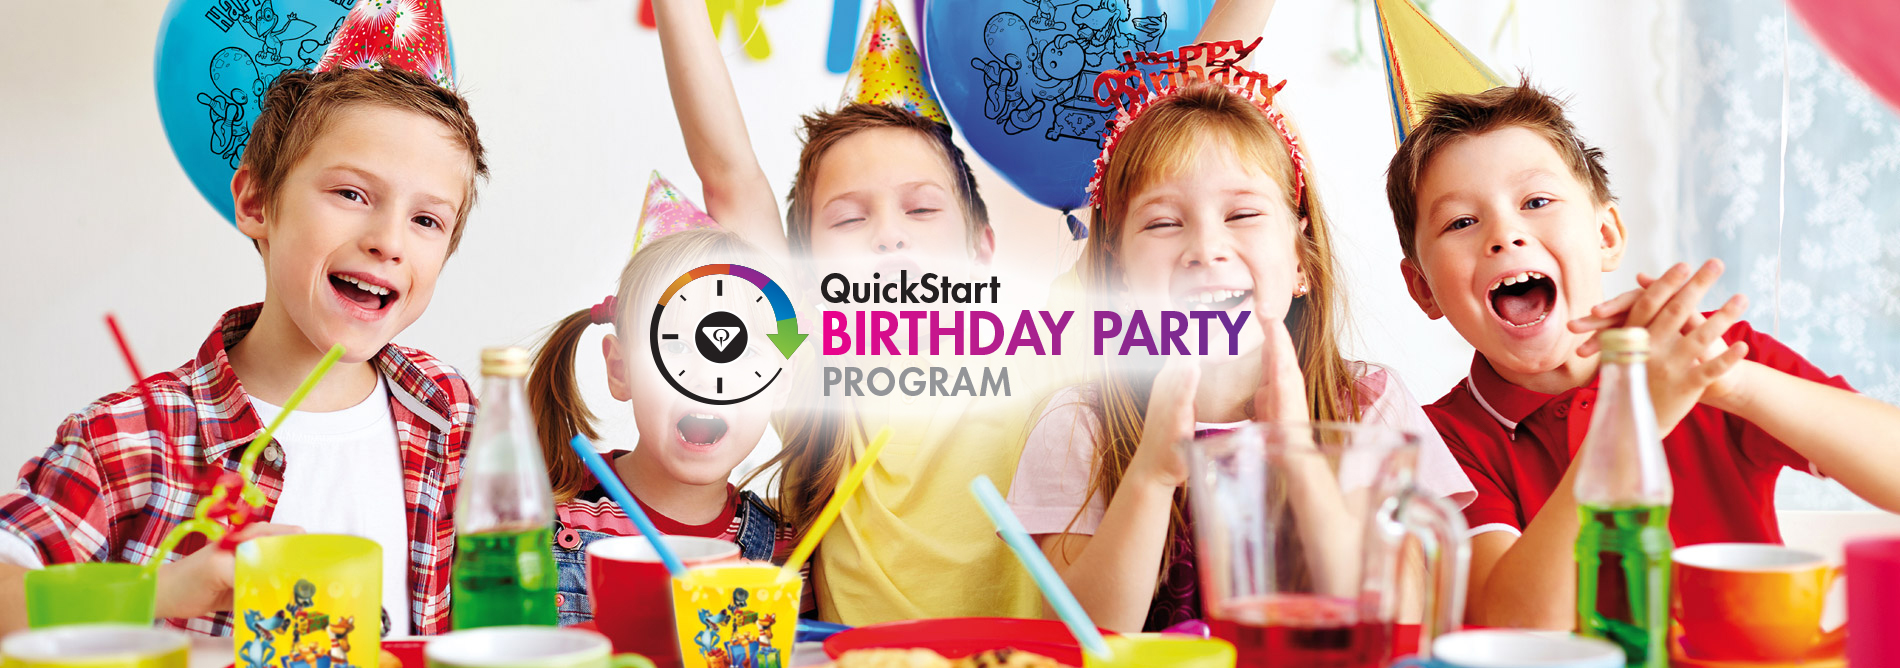 QubicaAMF-bowling-birthday-QuickStart-banner.jpg